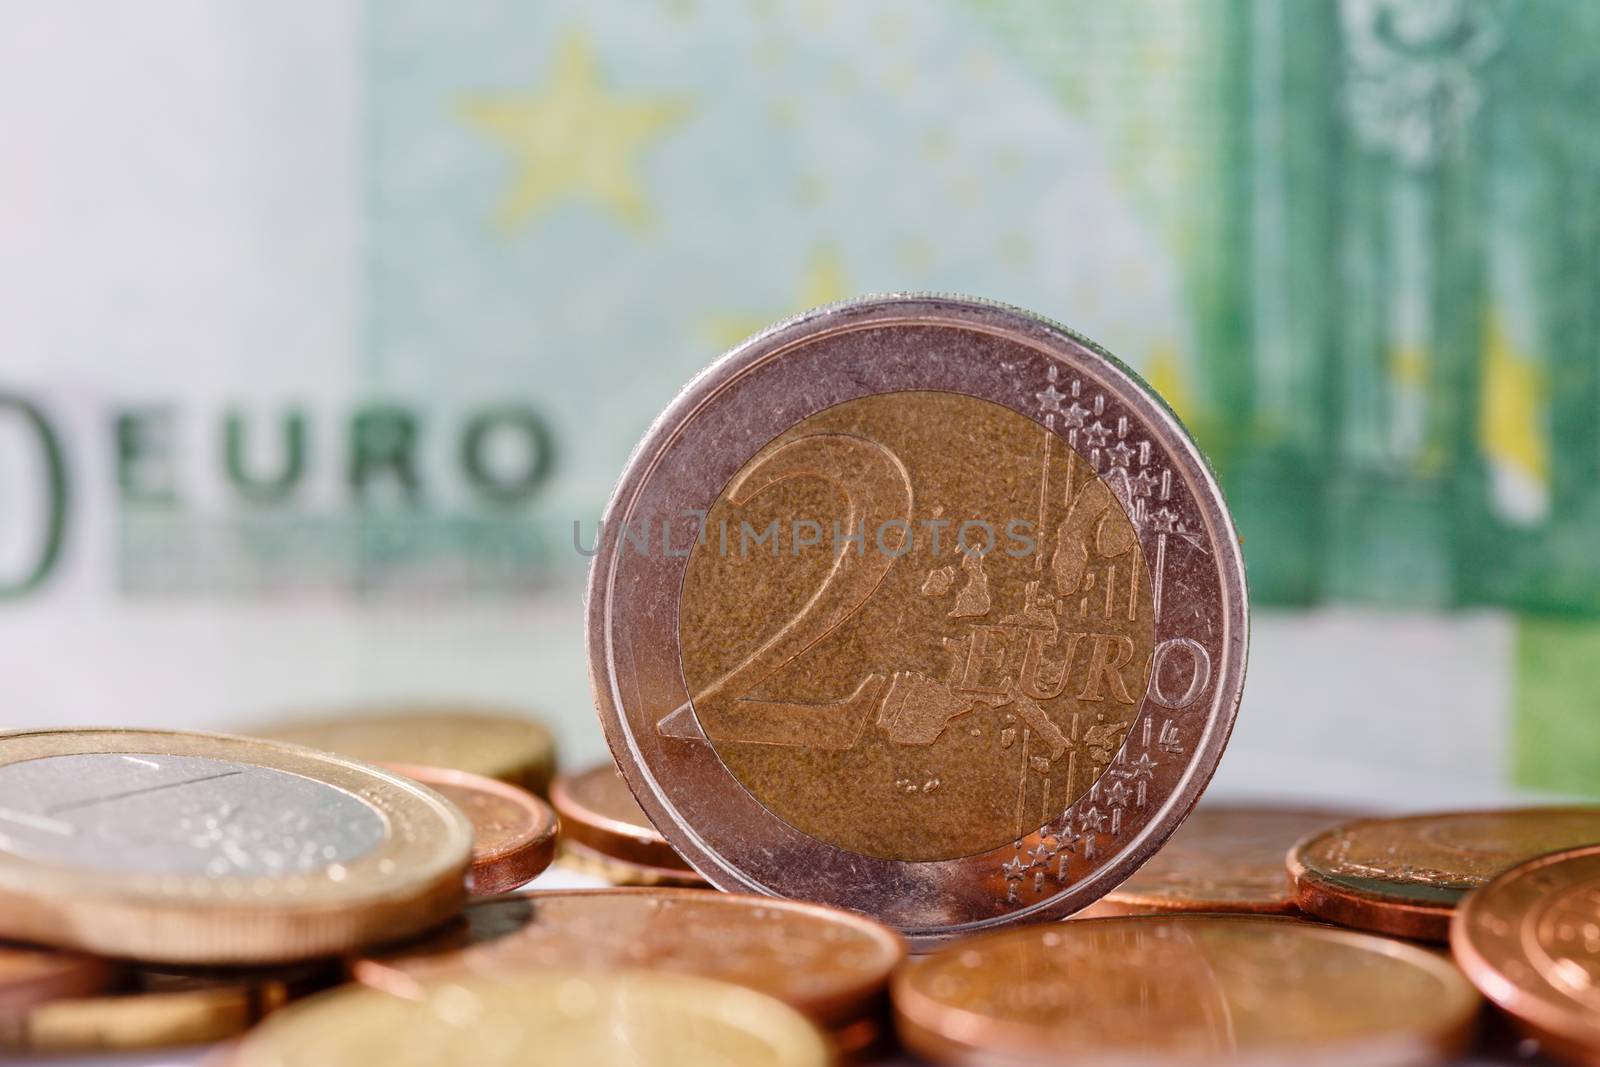 Euro coins by Roka